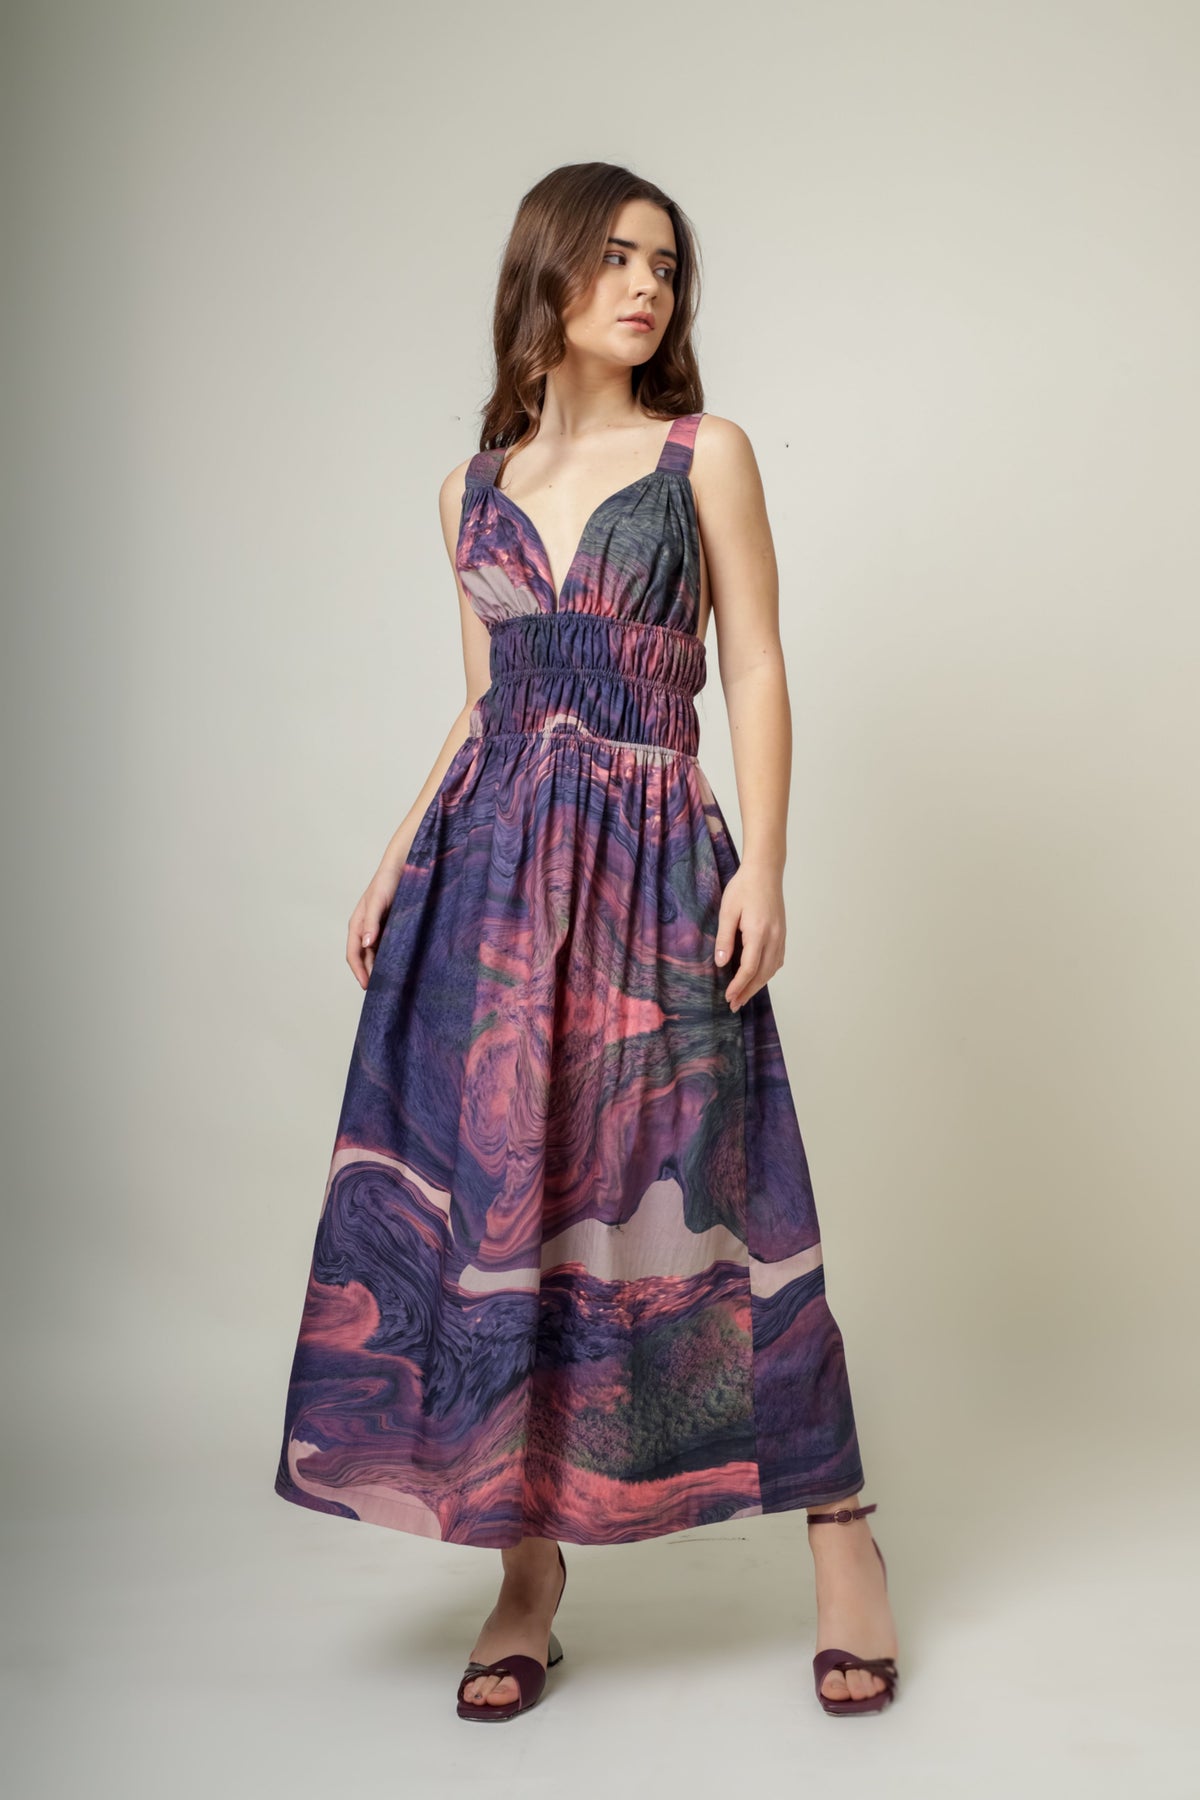 August Printed Dress